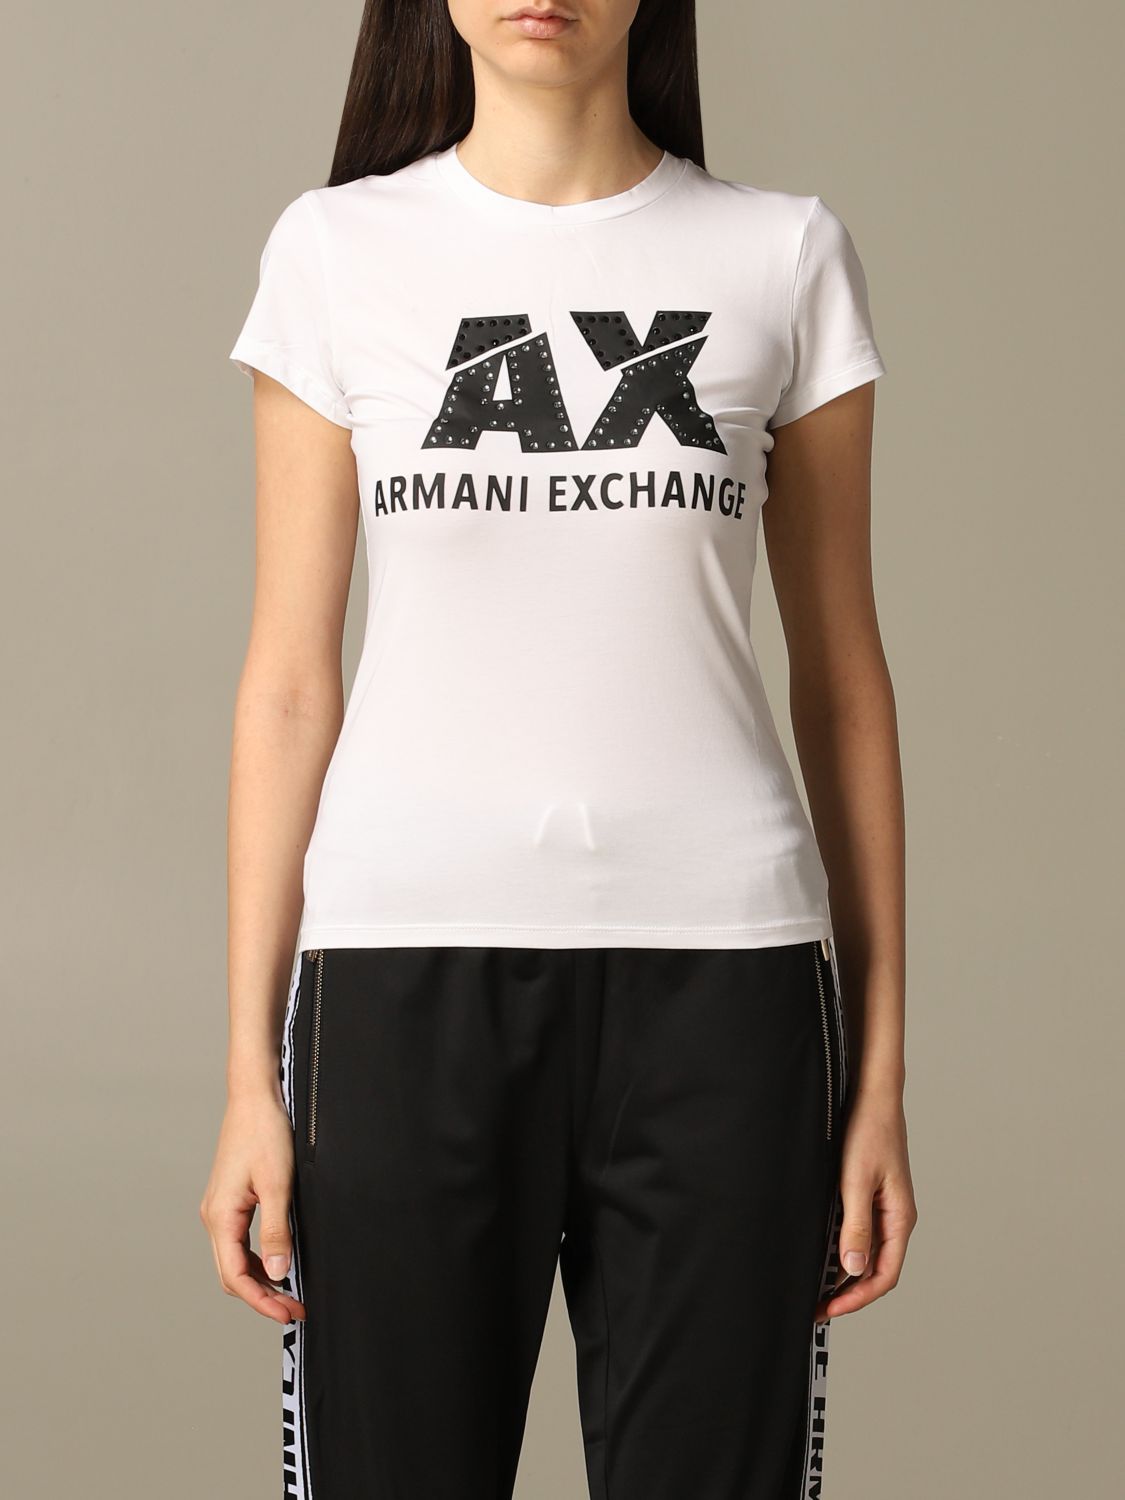 armani exchange shirt womens